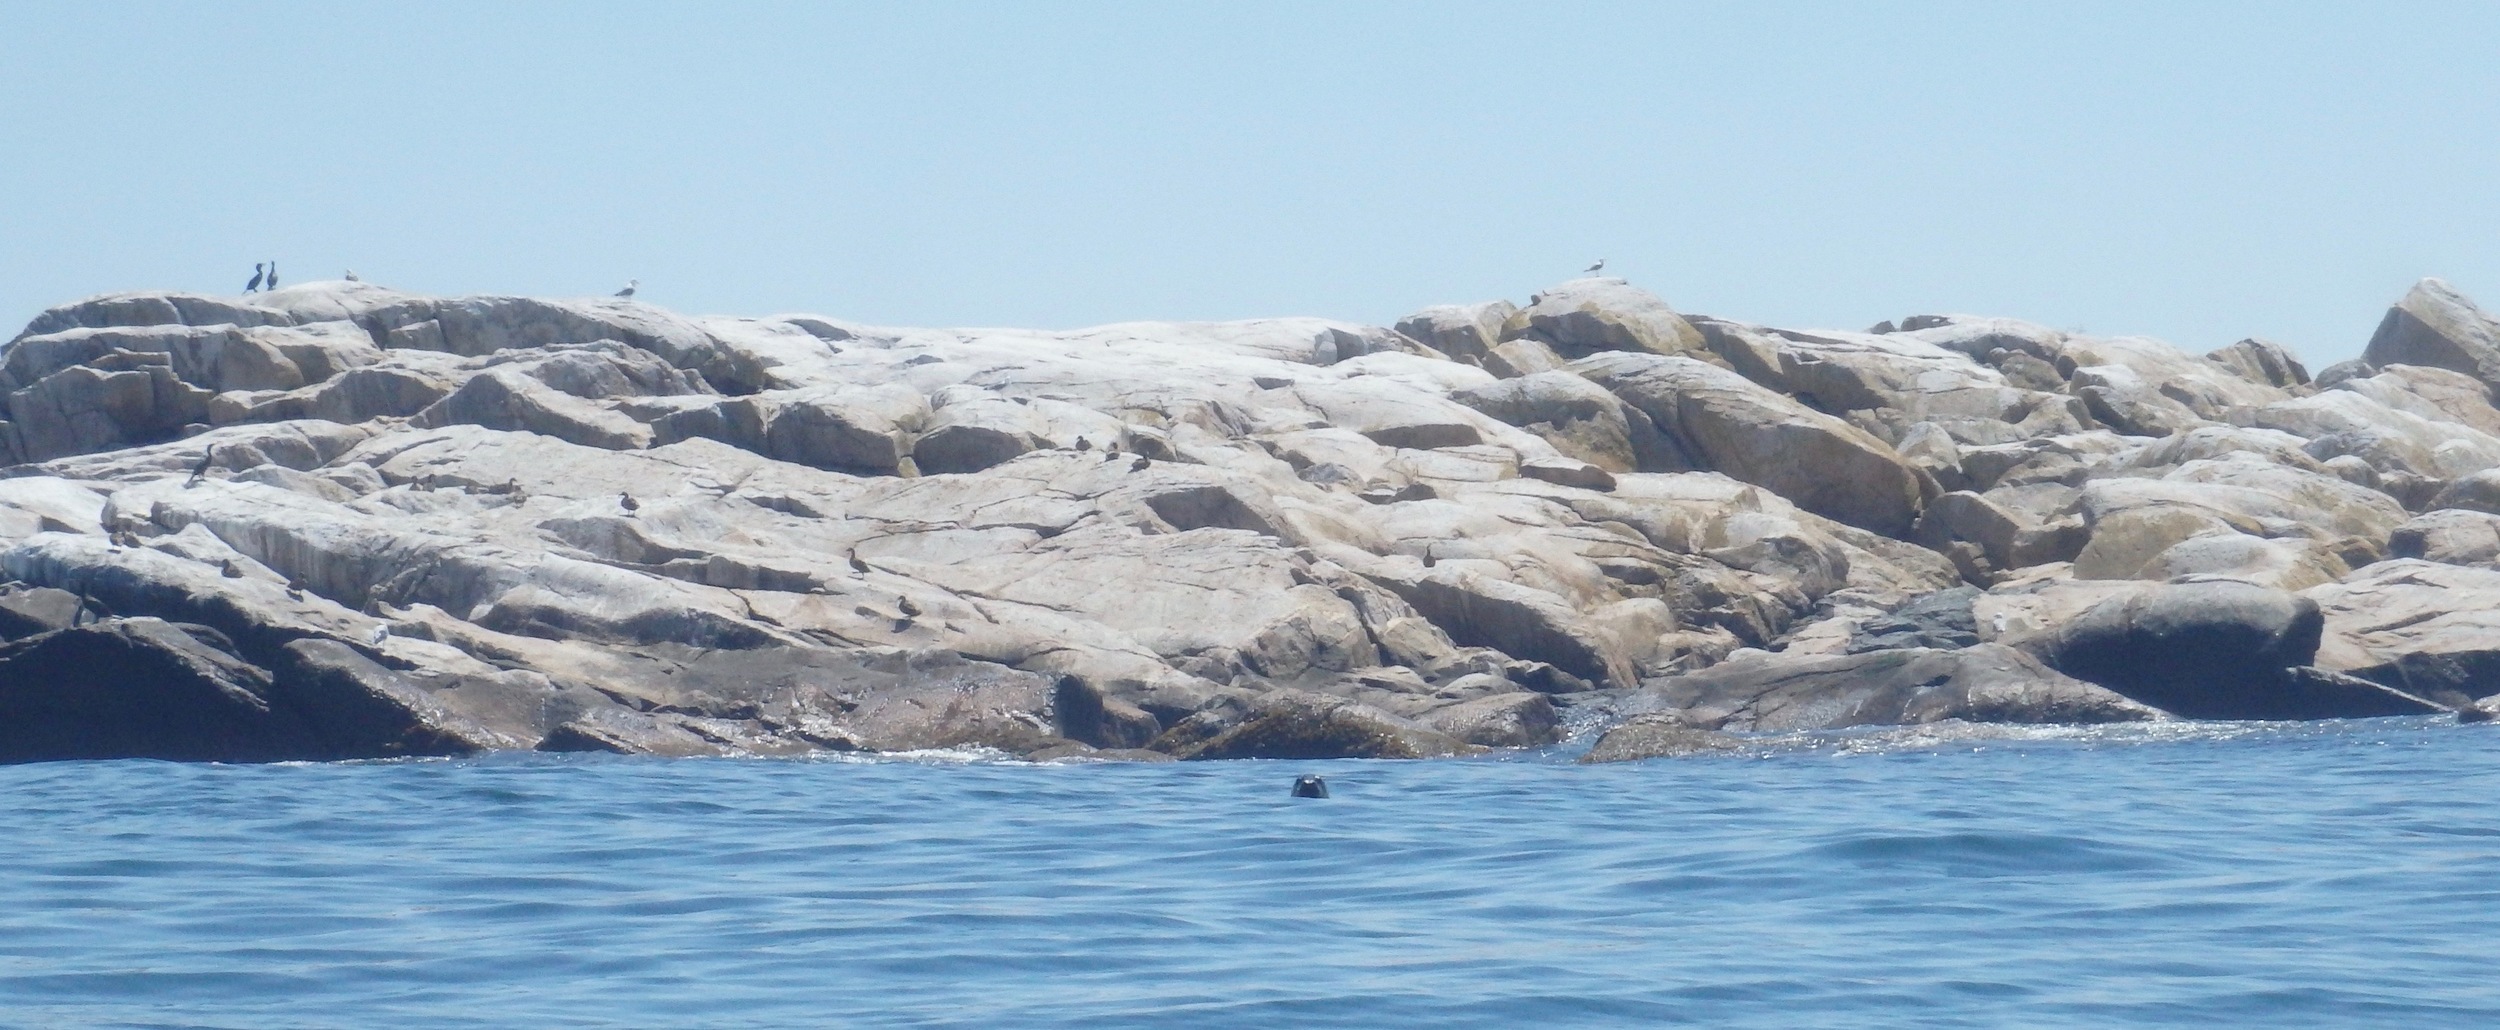 Seal off Matinicus Rock